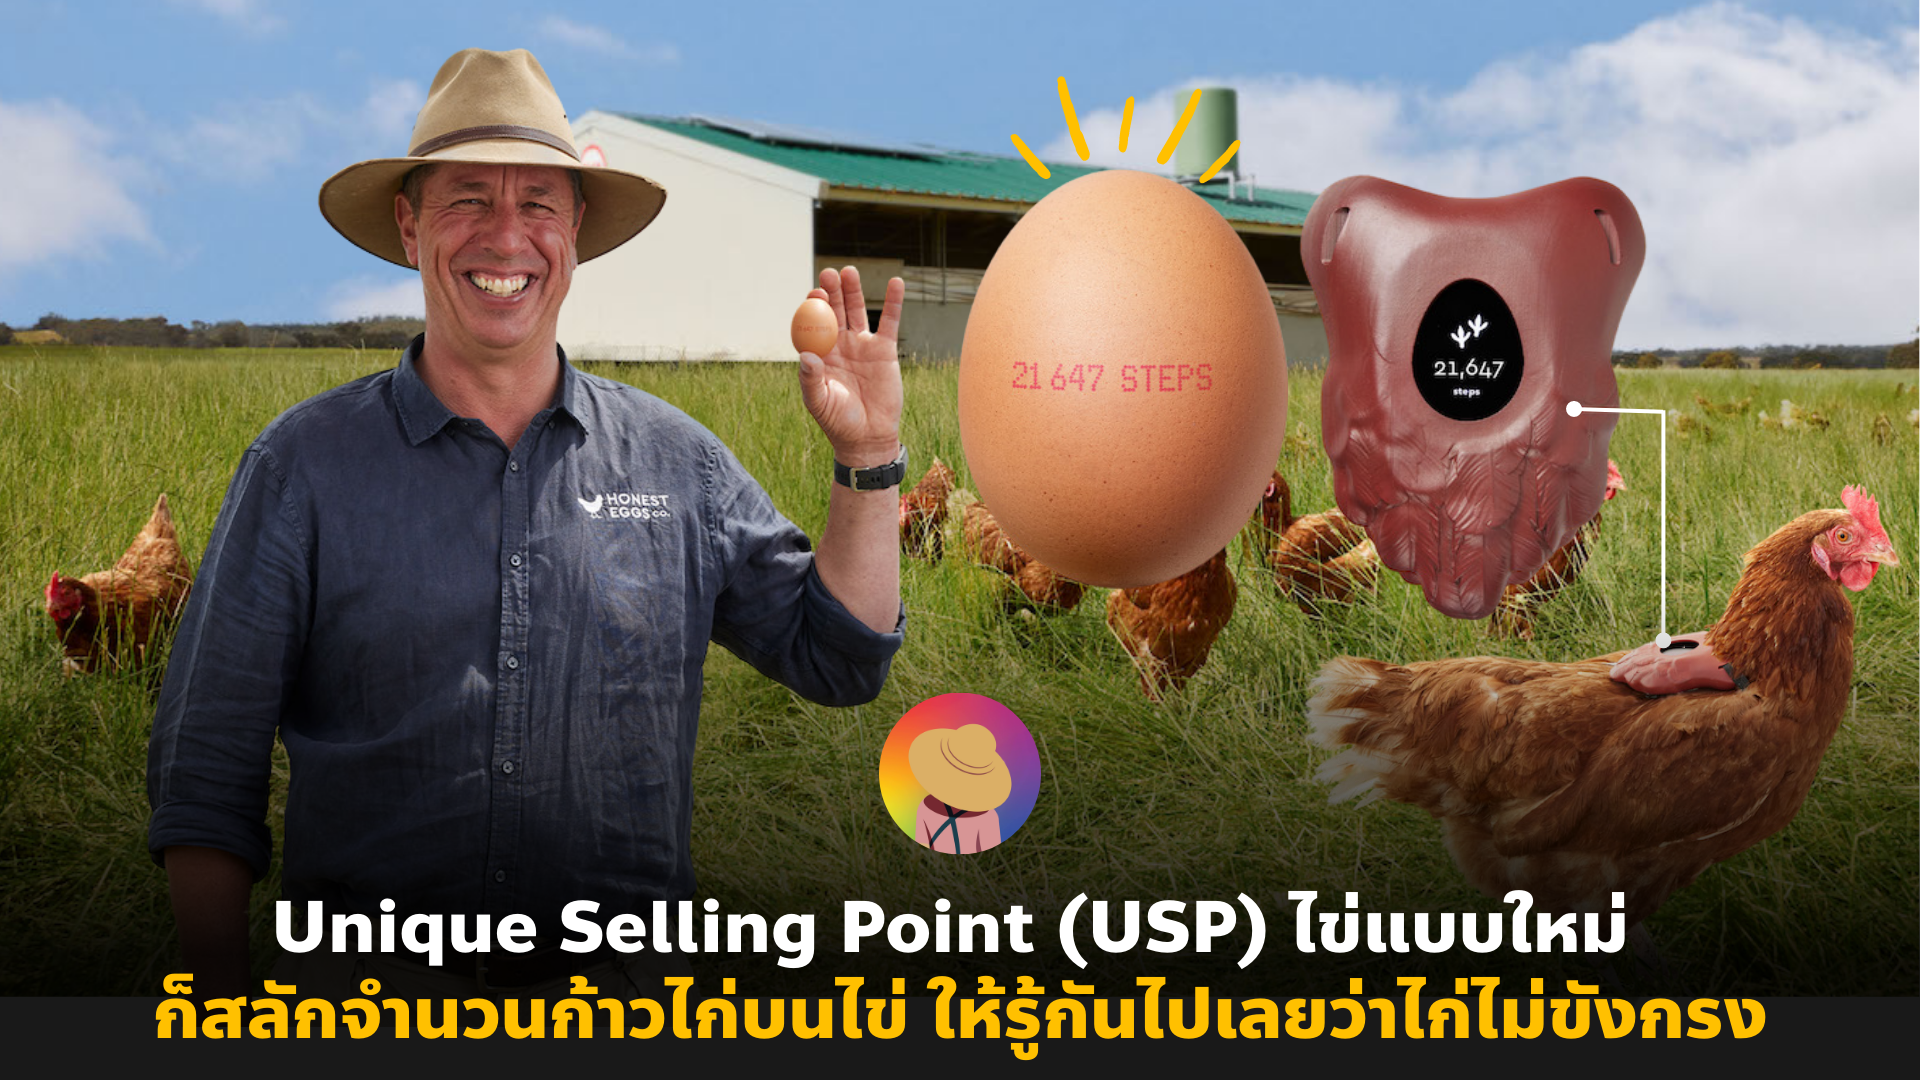 Unique Selling Point (USP) สลักจำนวนก้าวไก่บนไข่ ให้รู้กันไปเลยว่าไก่ไม่ขังกรง